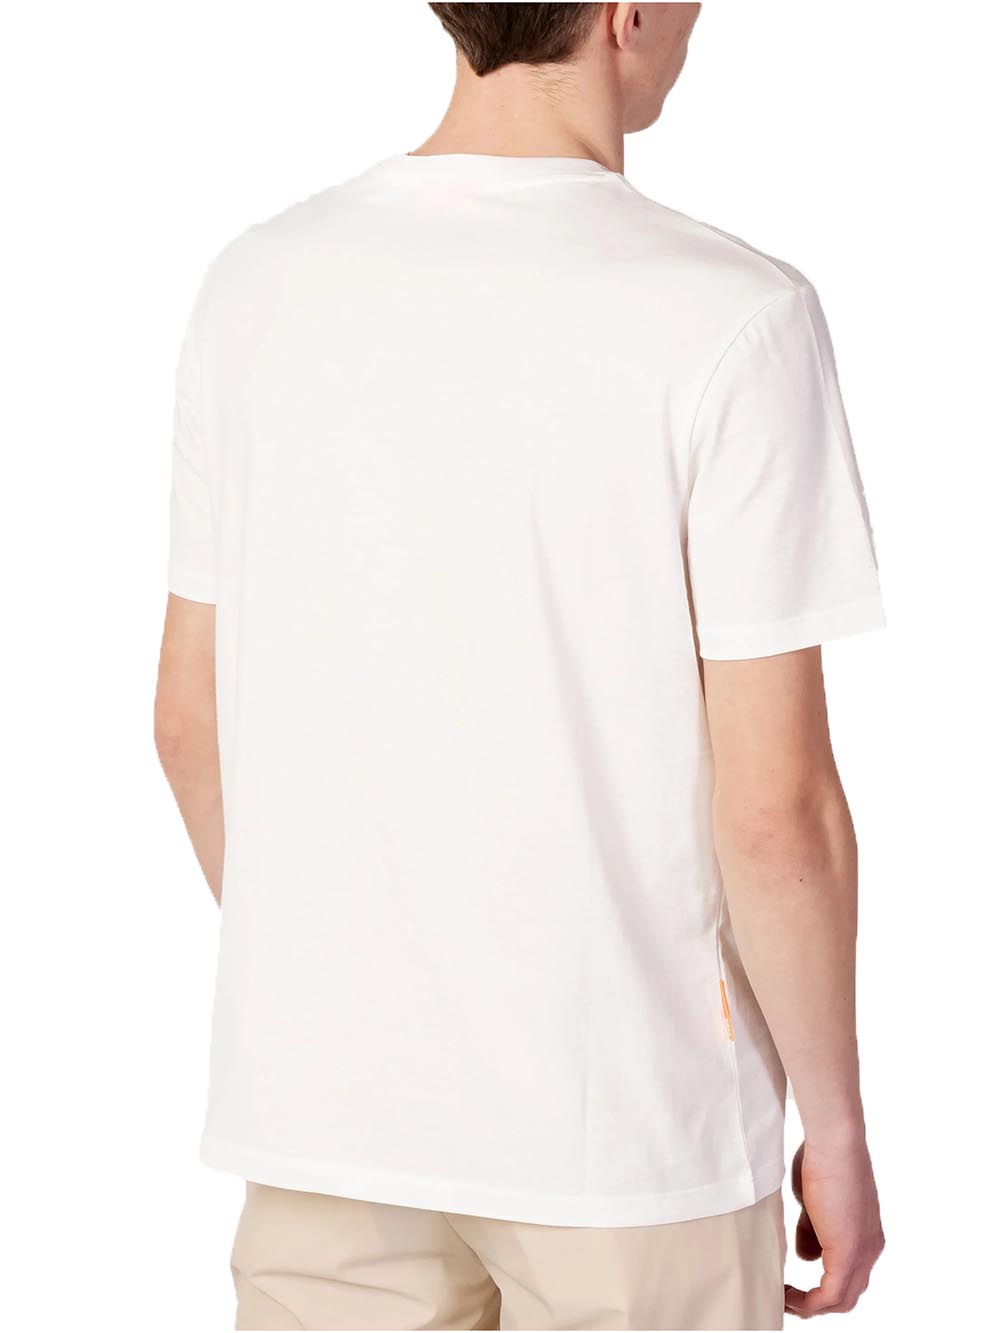 Suns T-shirt Uomo Panna